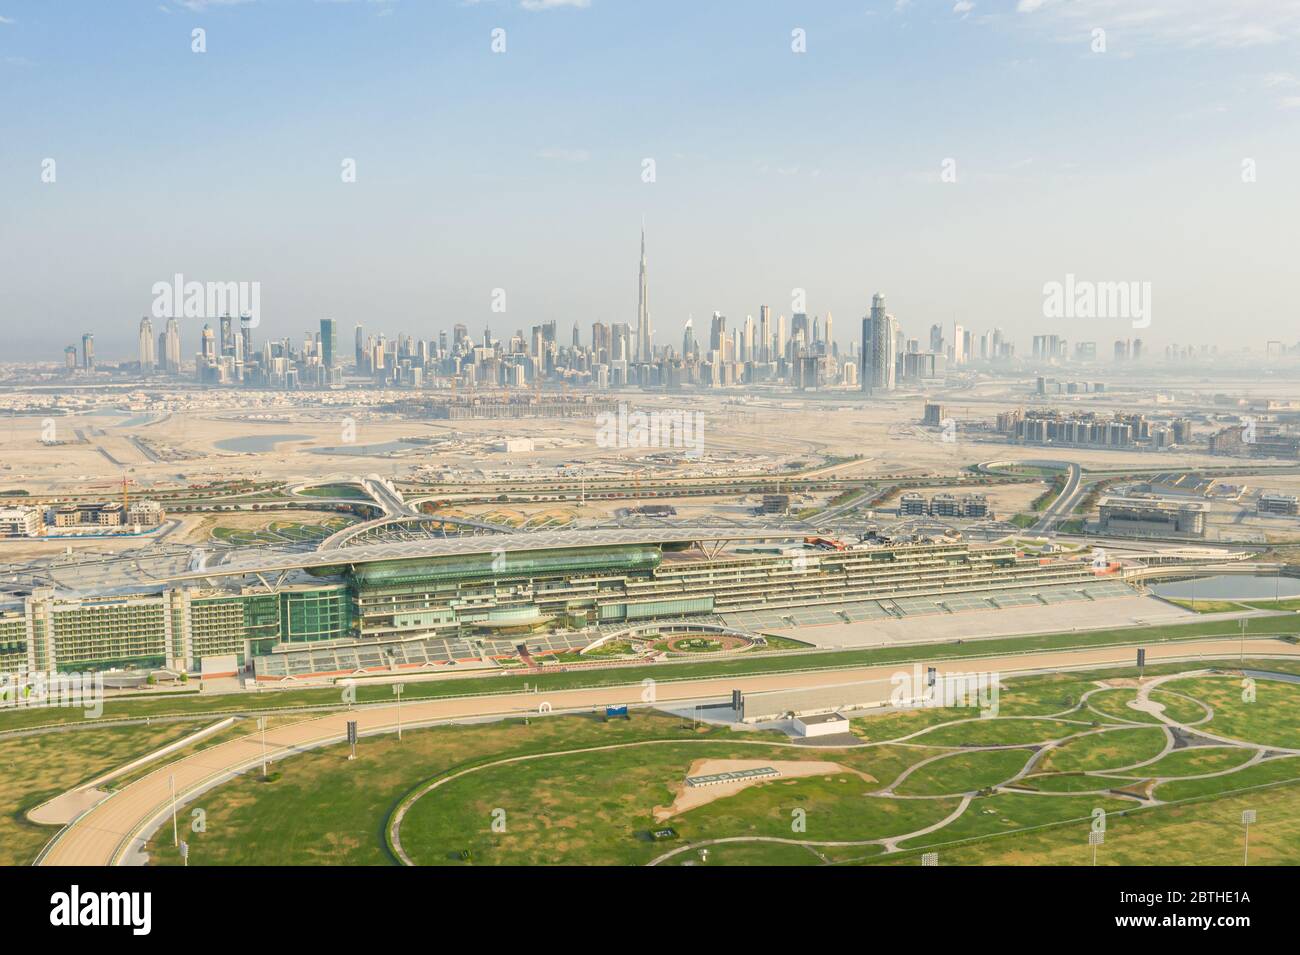 Dubai, UAE - May 24, 2020: Dubai Downtown skyline as viewed from the Meydan racing complex. Stock Photo